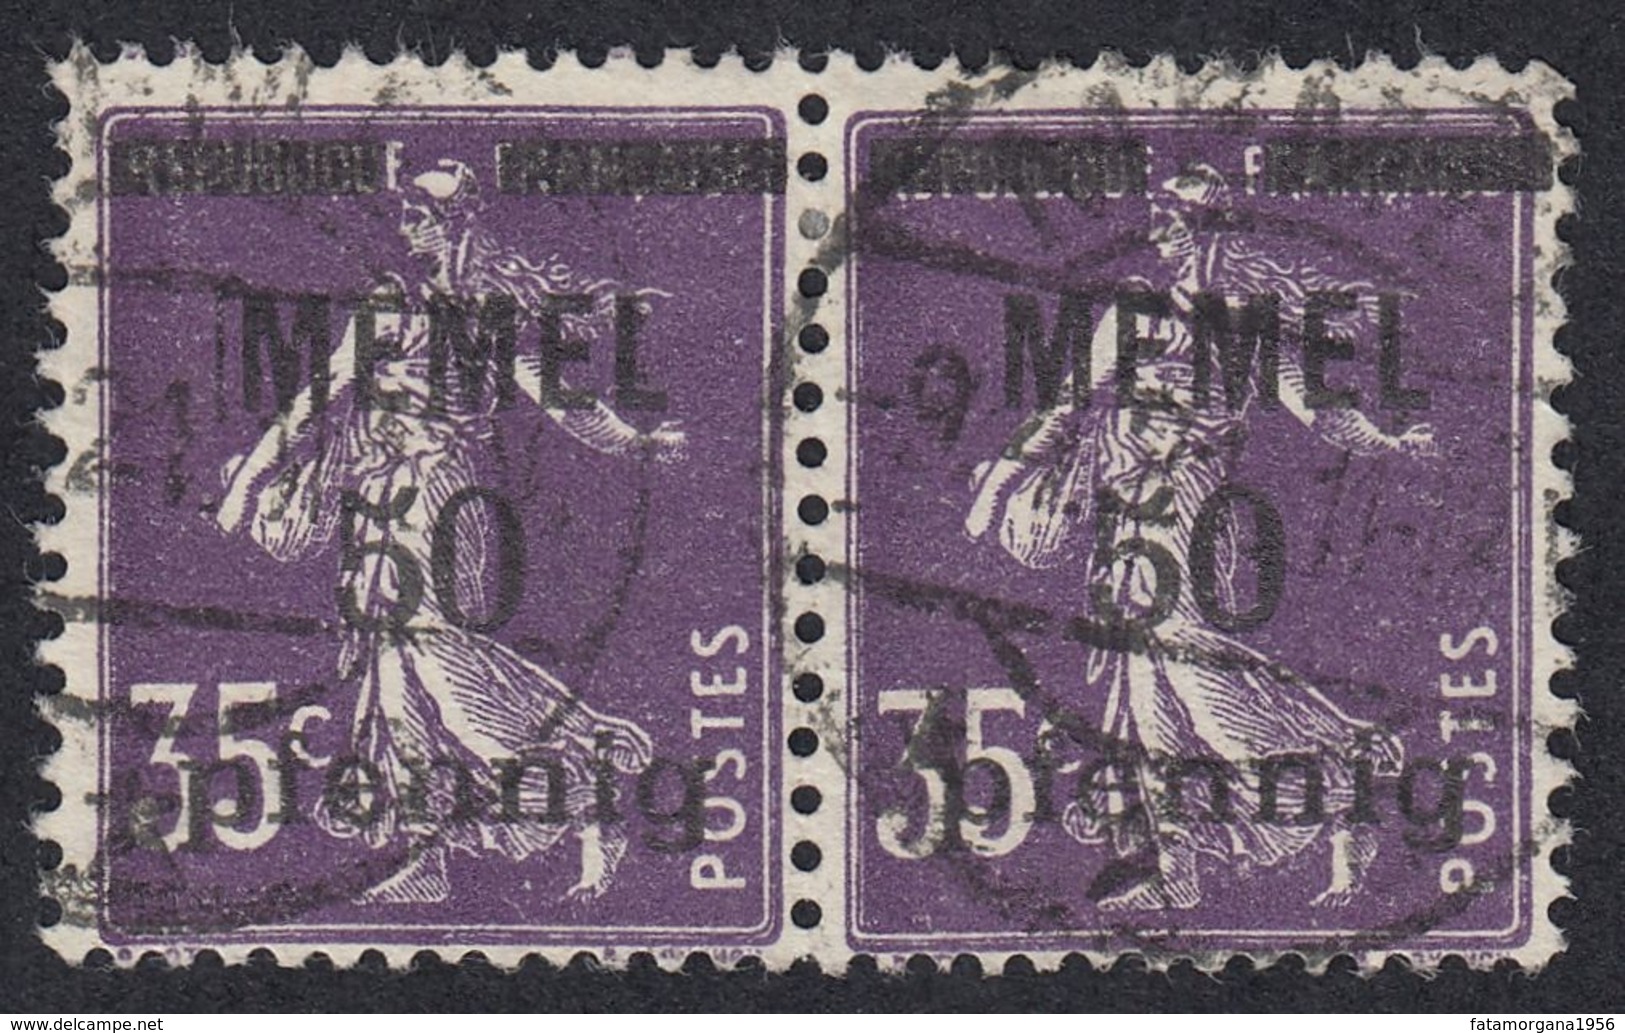 FRANCE Francia Frankreich (colonie) - 1920/1921 - Memel - Yvert 23, Due Francobolli Uniti, Obliterati - Usati